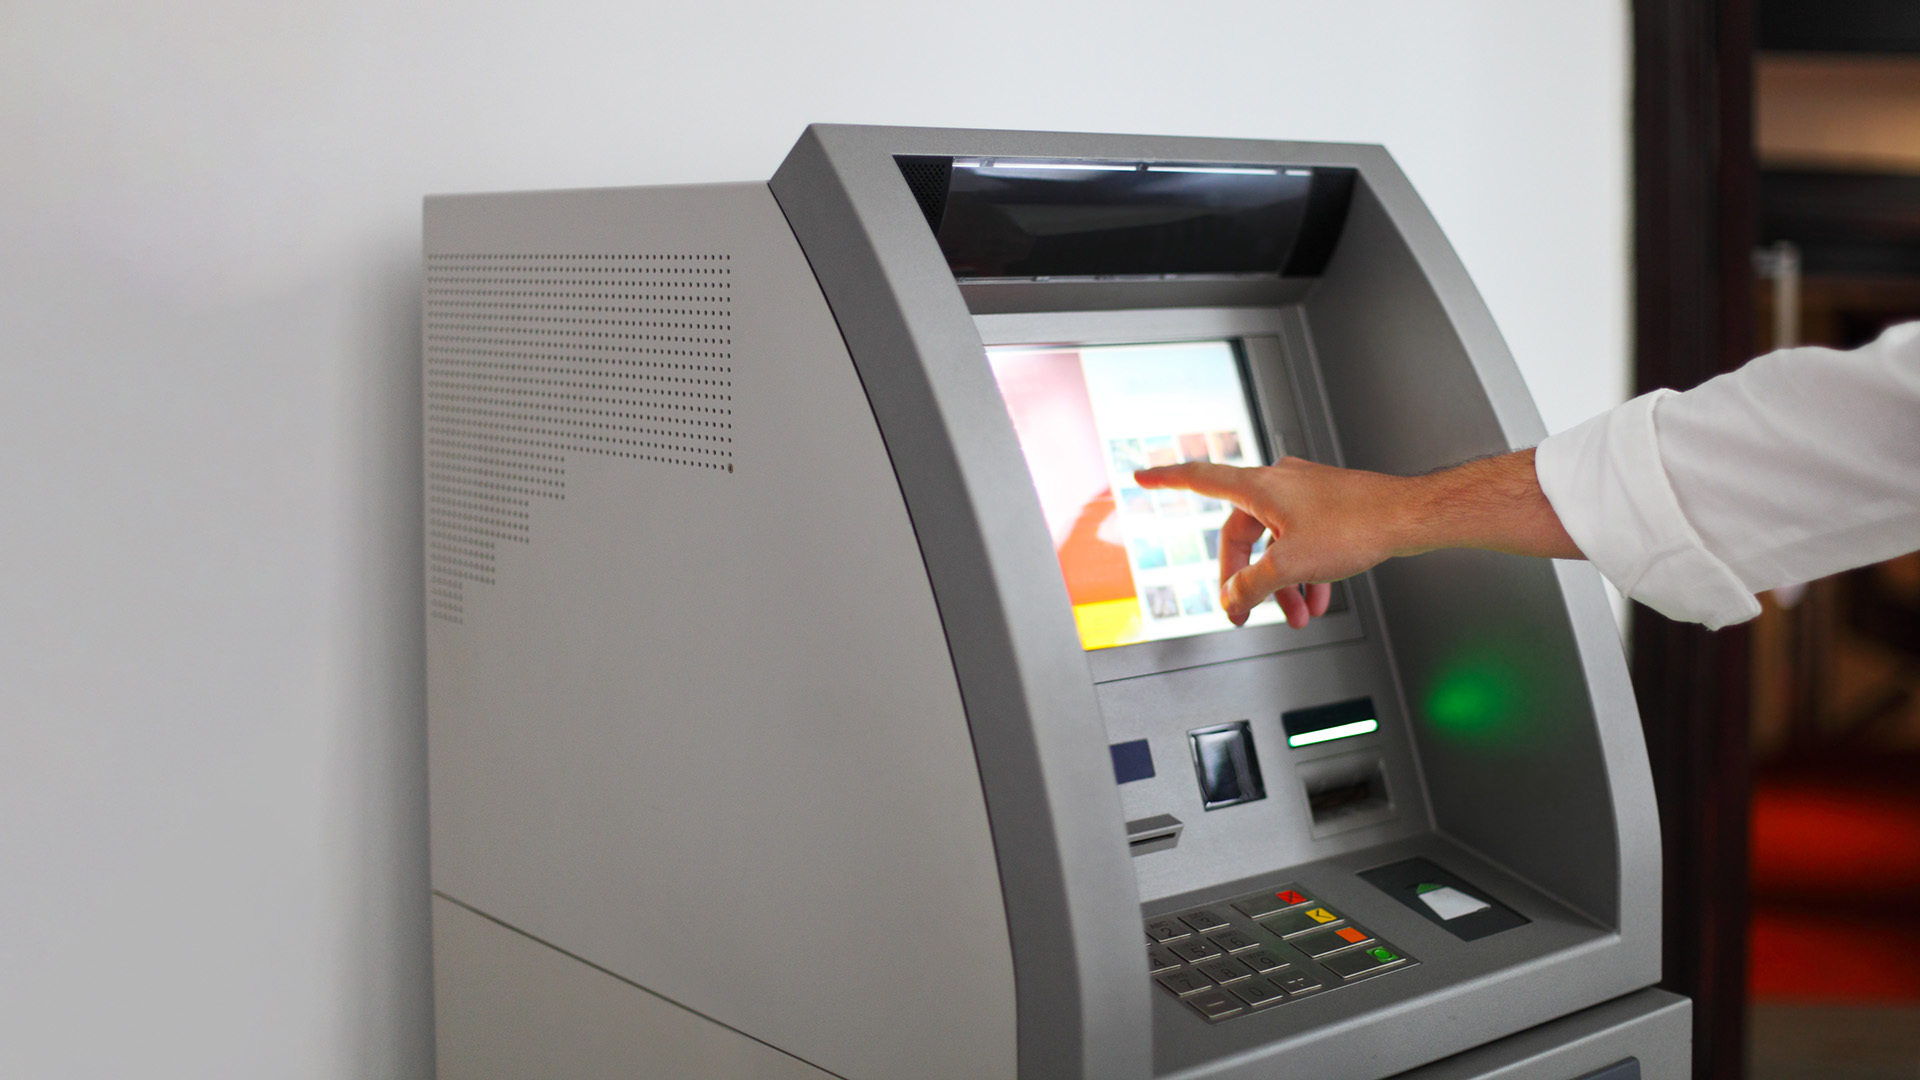 Essay On ATM Machine